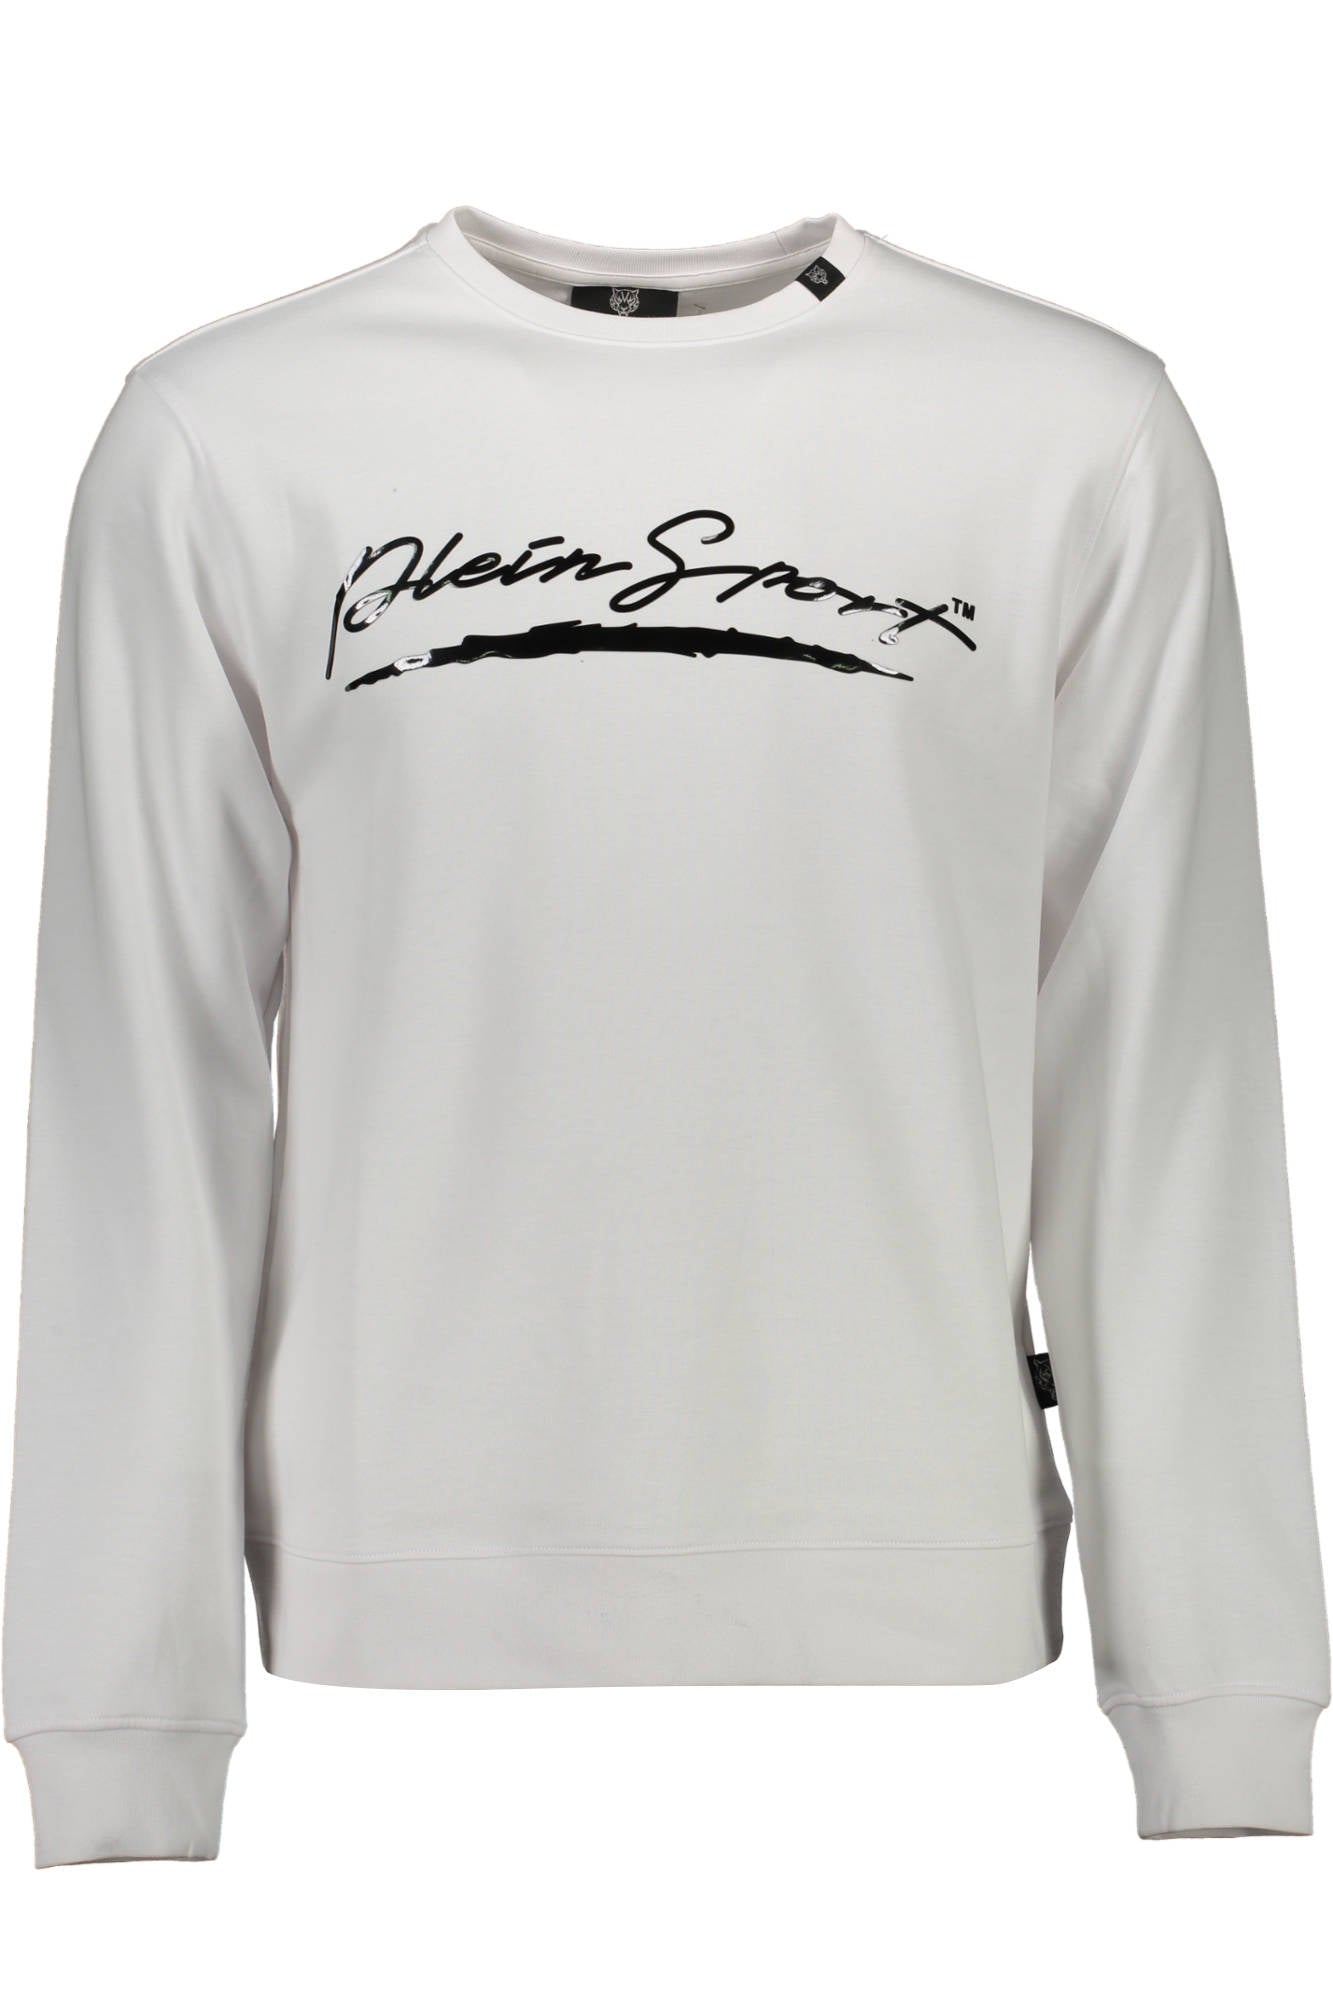 Plein Sport White Sweater - Fizigo